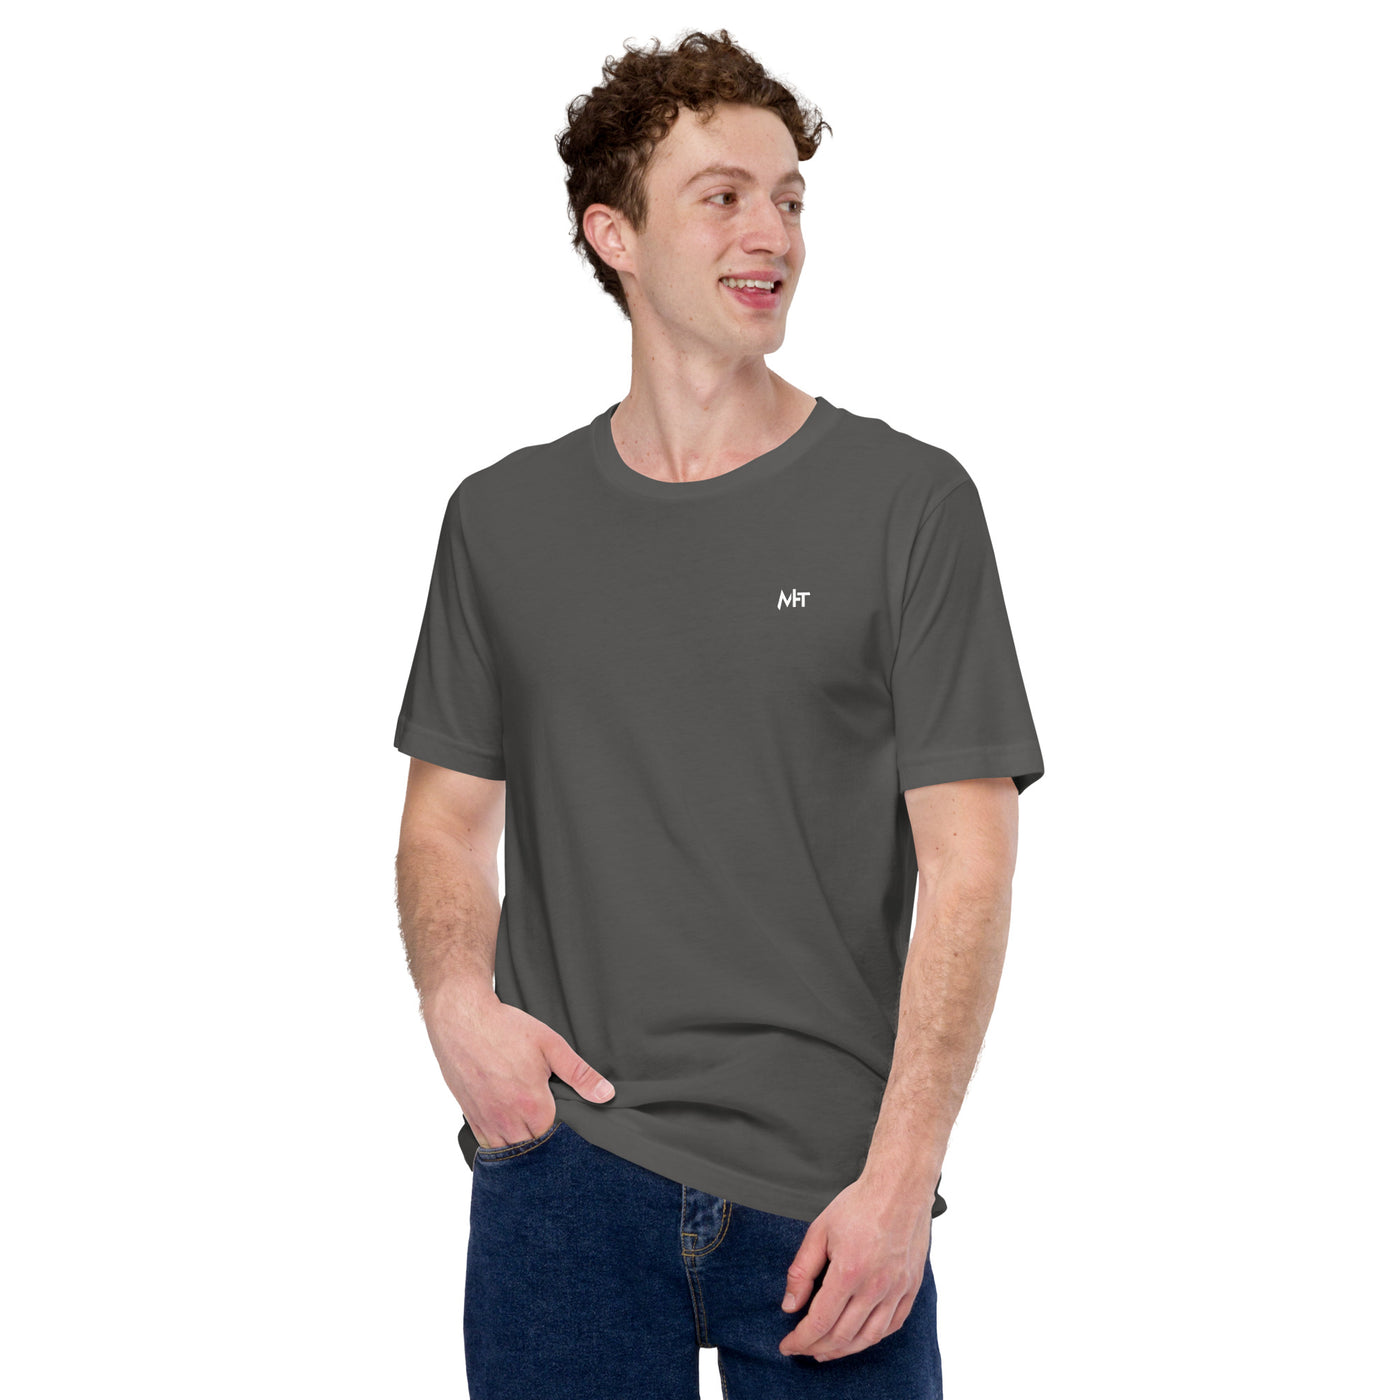 Bitcoin the Halvening - Unisex t-shirt ( Back Print )